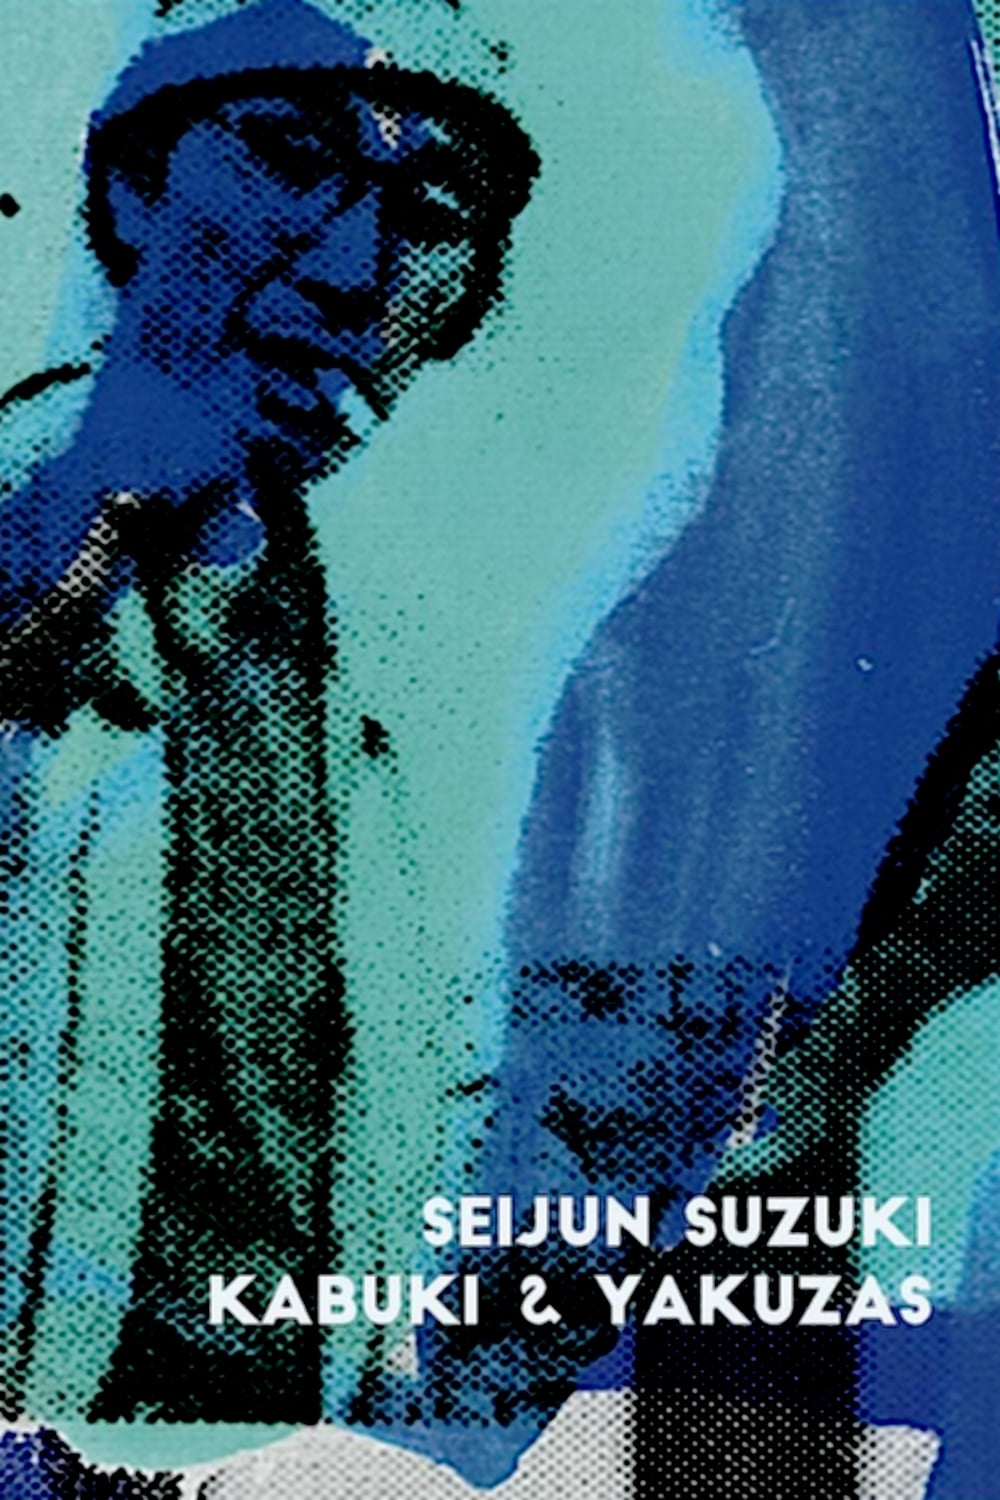 Seijun Suzuki: kabuki & yakuzas